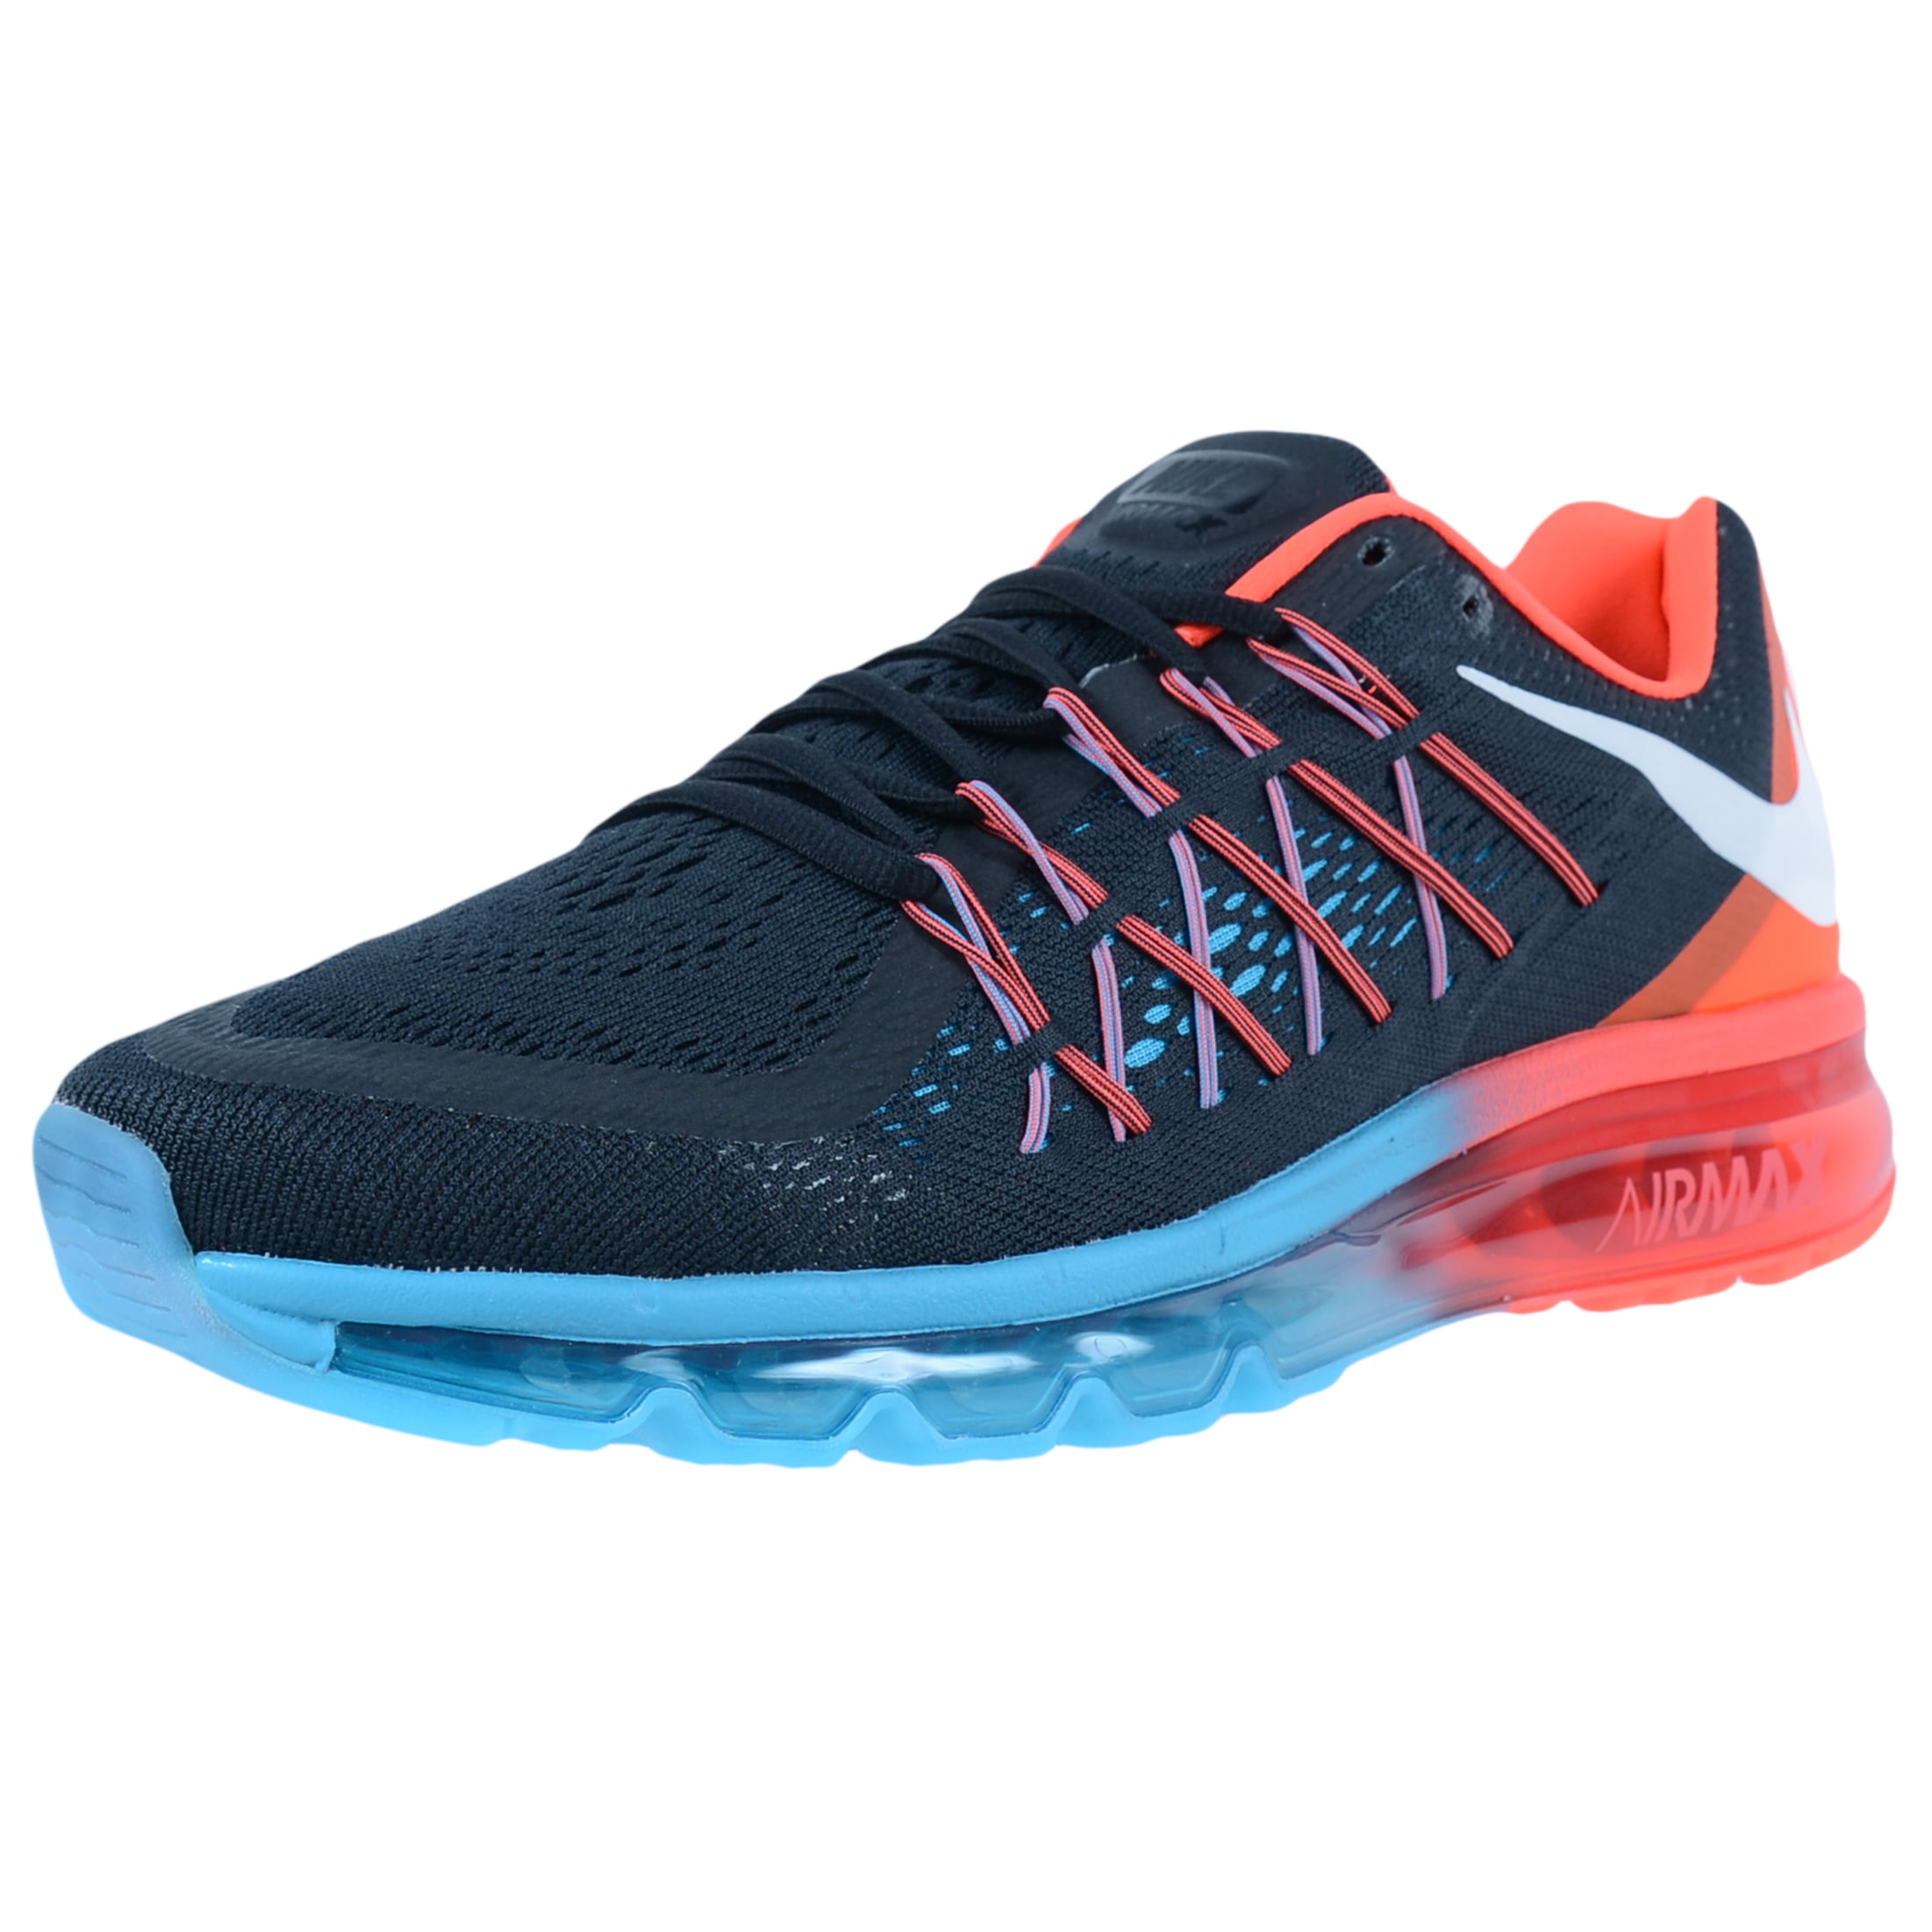 men's air max 2015 running shoe